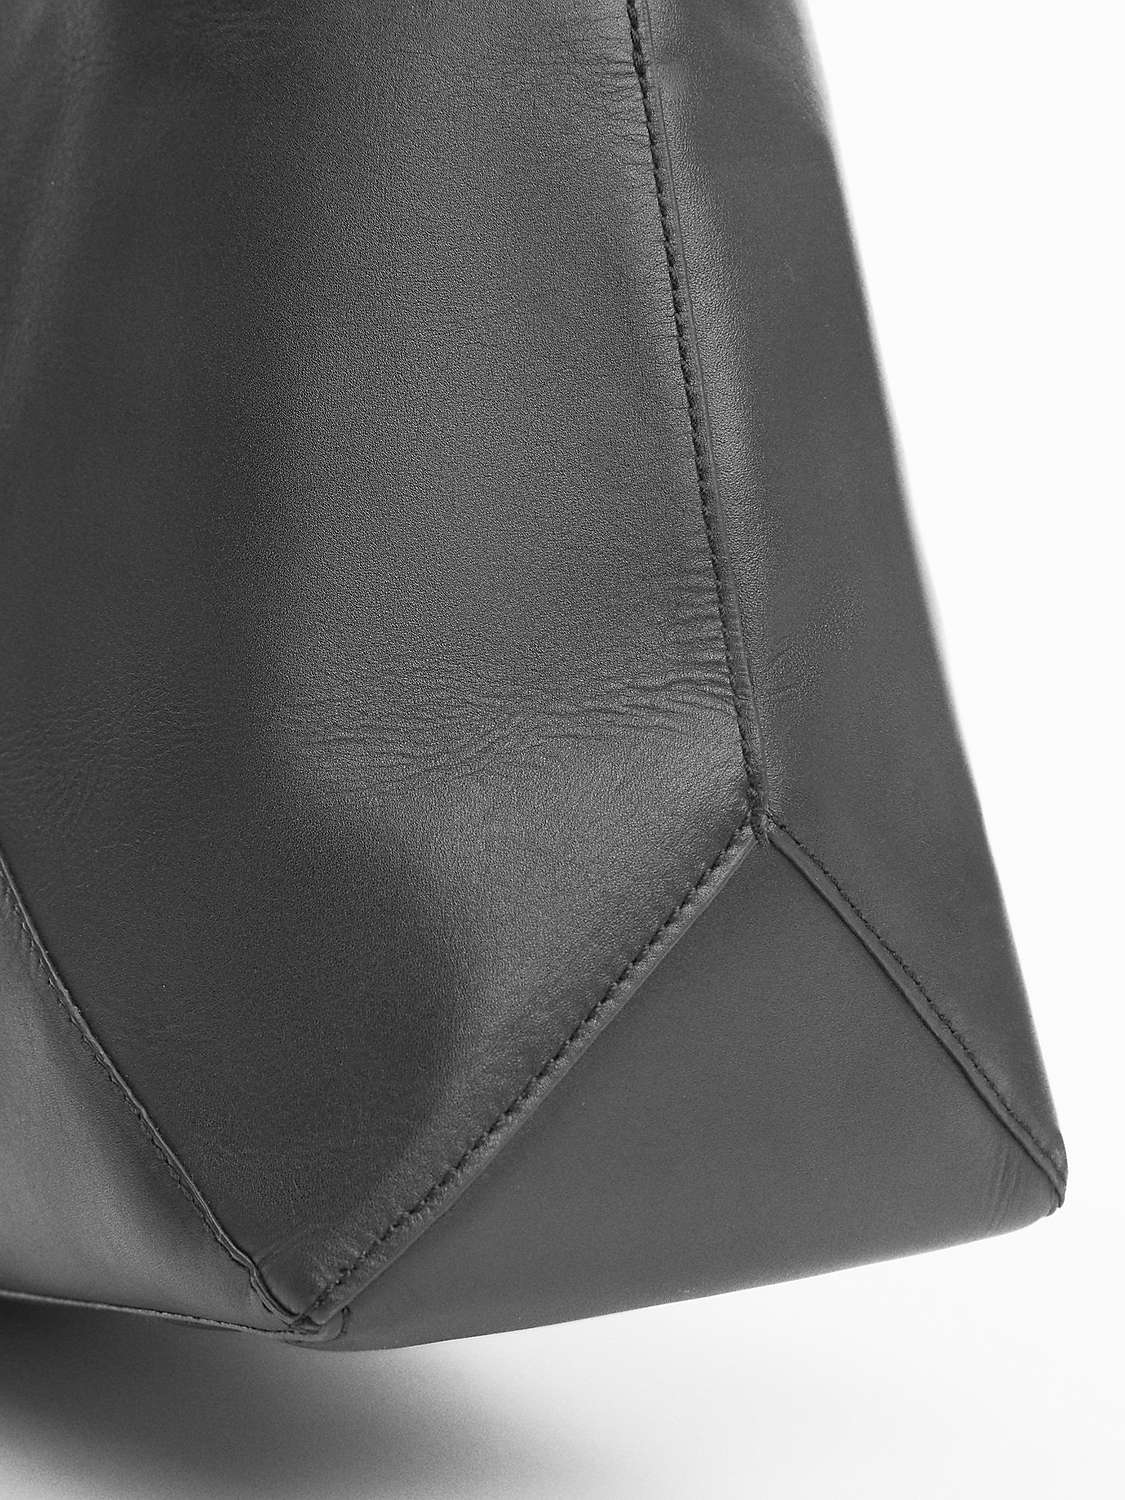 Buy Mango Carbo Cross Stitch Leather Bag, Black Online at johnlewis.com